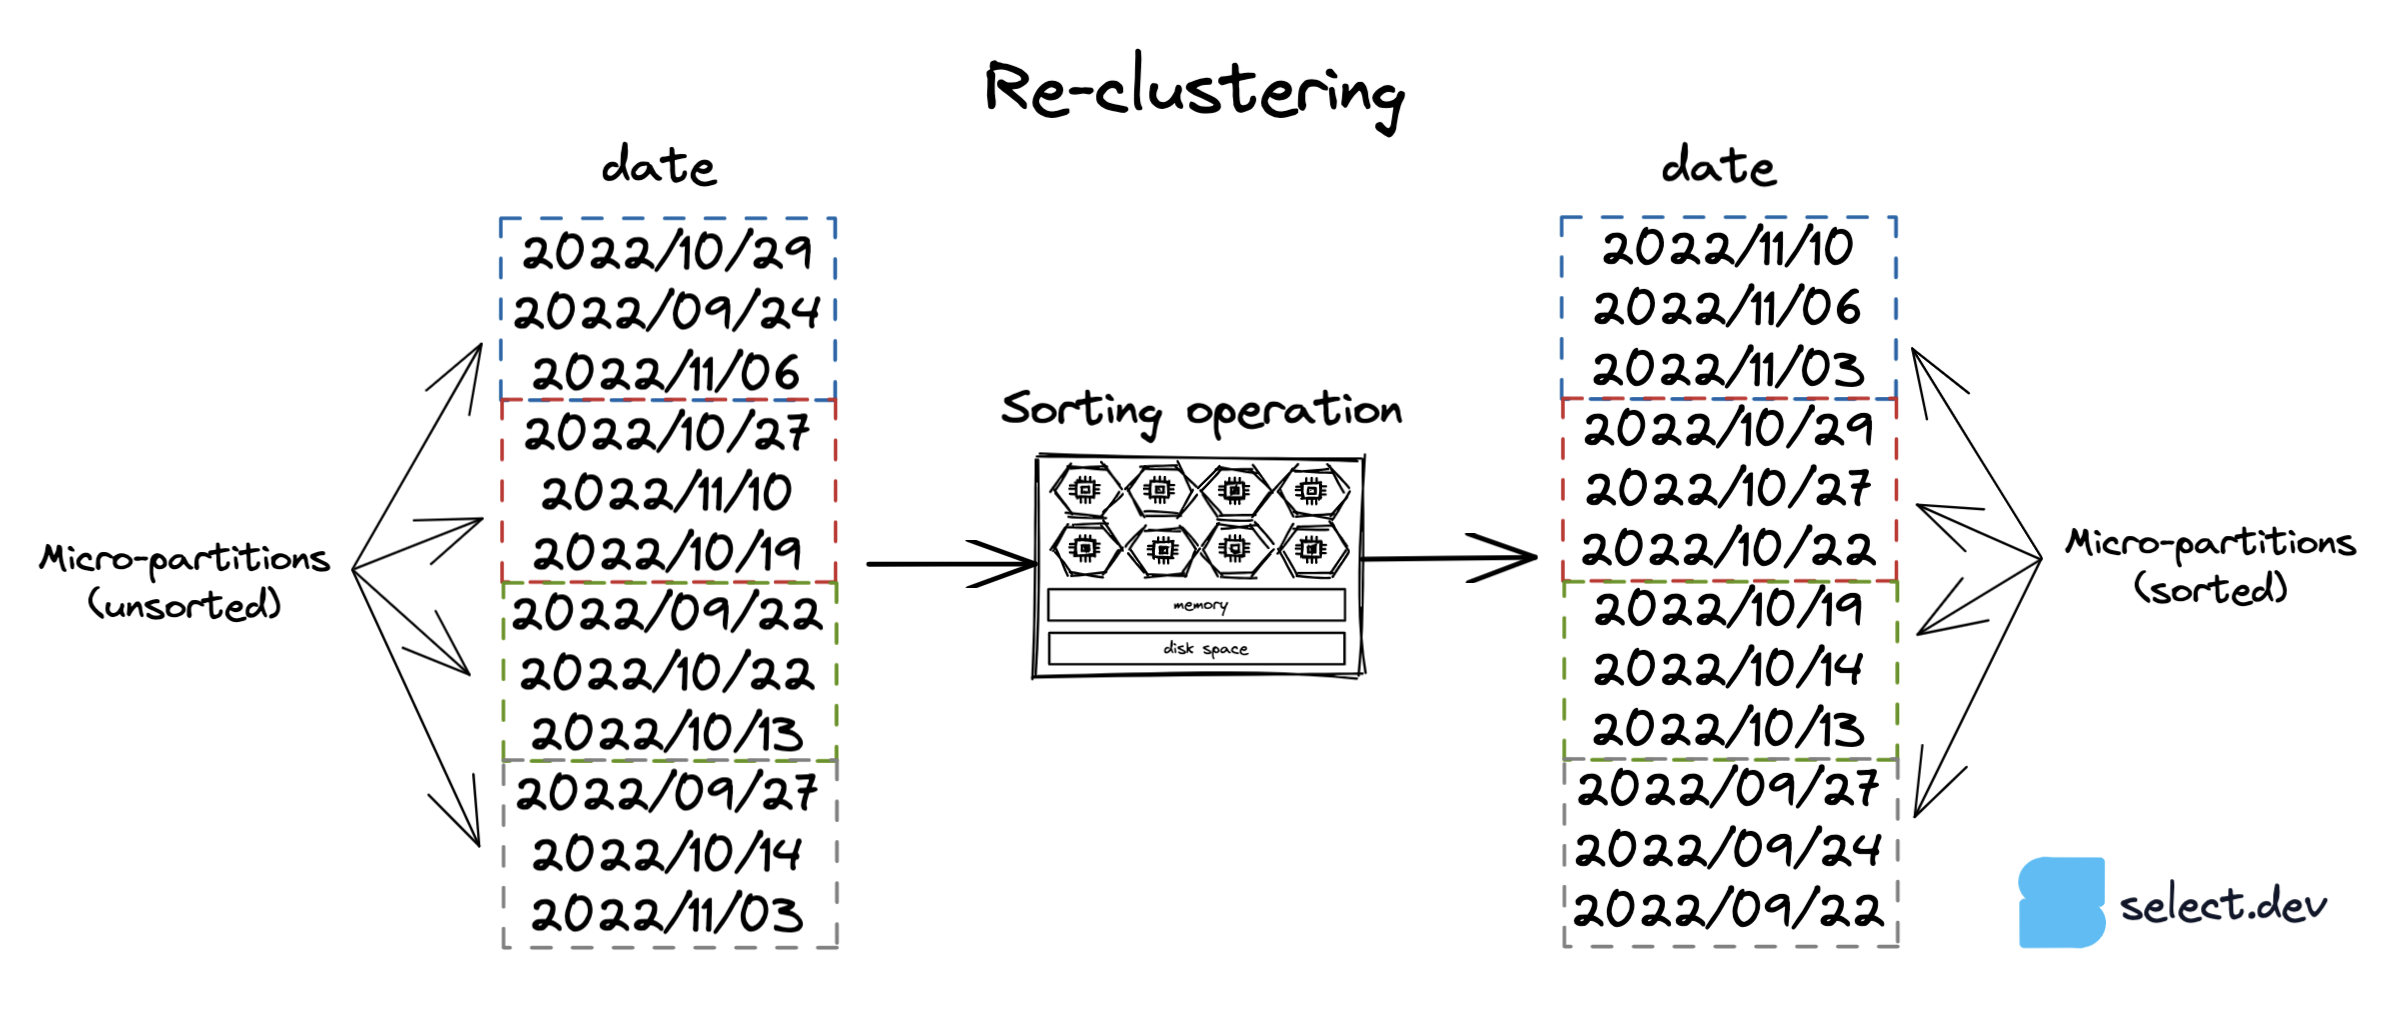 Re-clustering